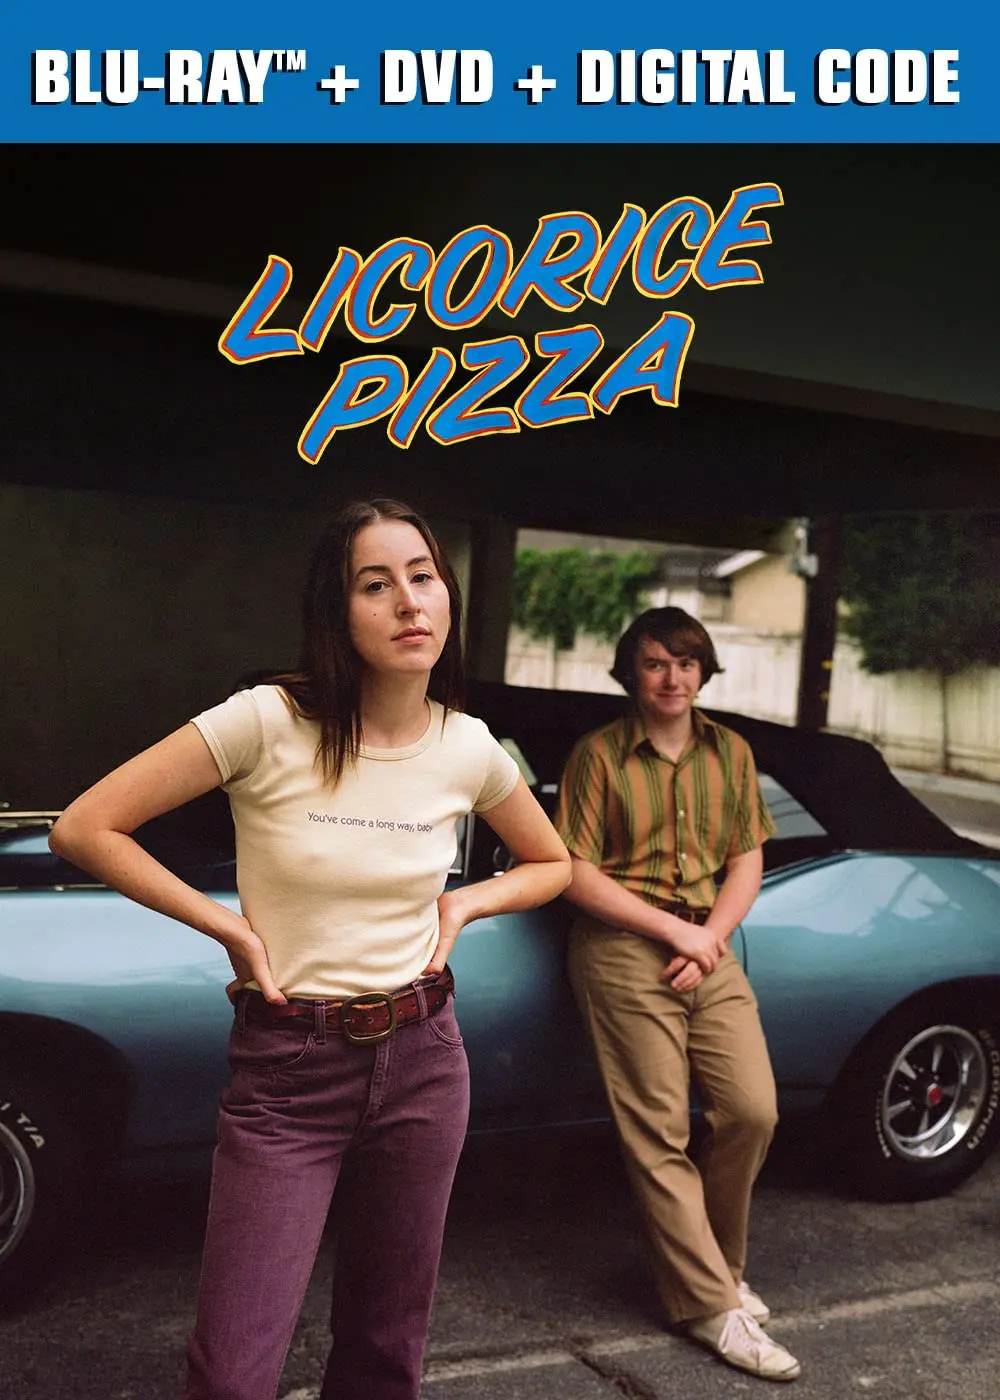 https://s1.occld.com/image/kb/kb_licorice-pizza-cover.jpg.webp